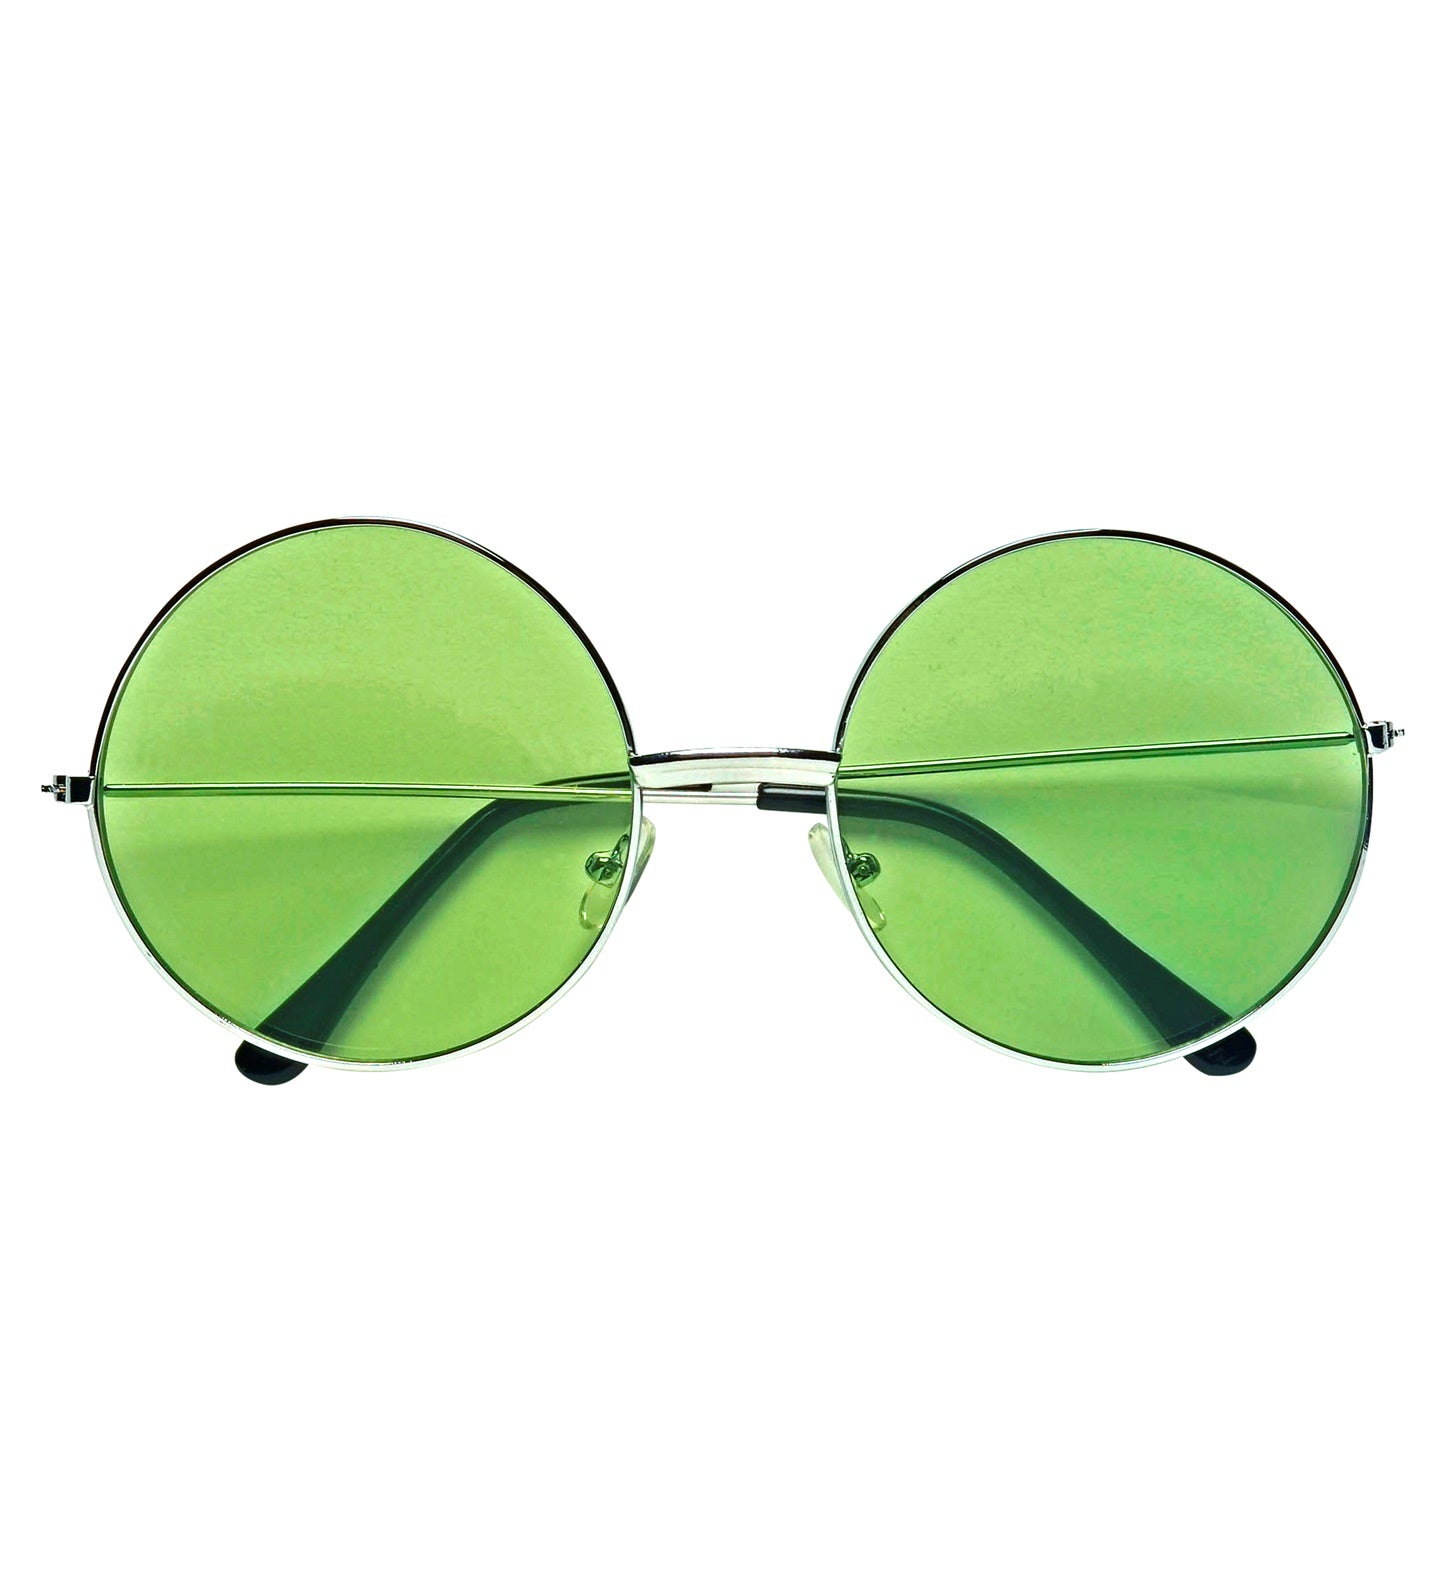 Green 70's Glasses